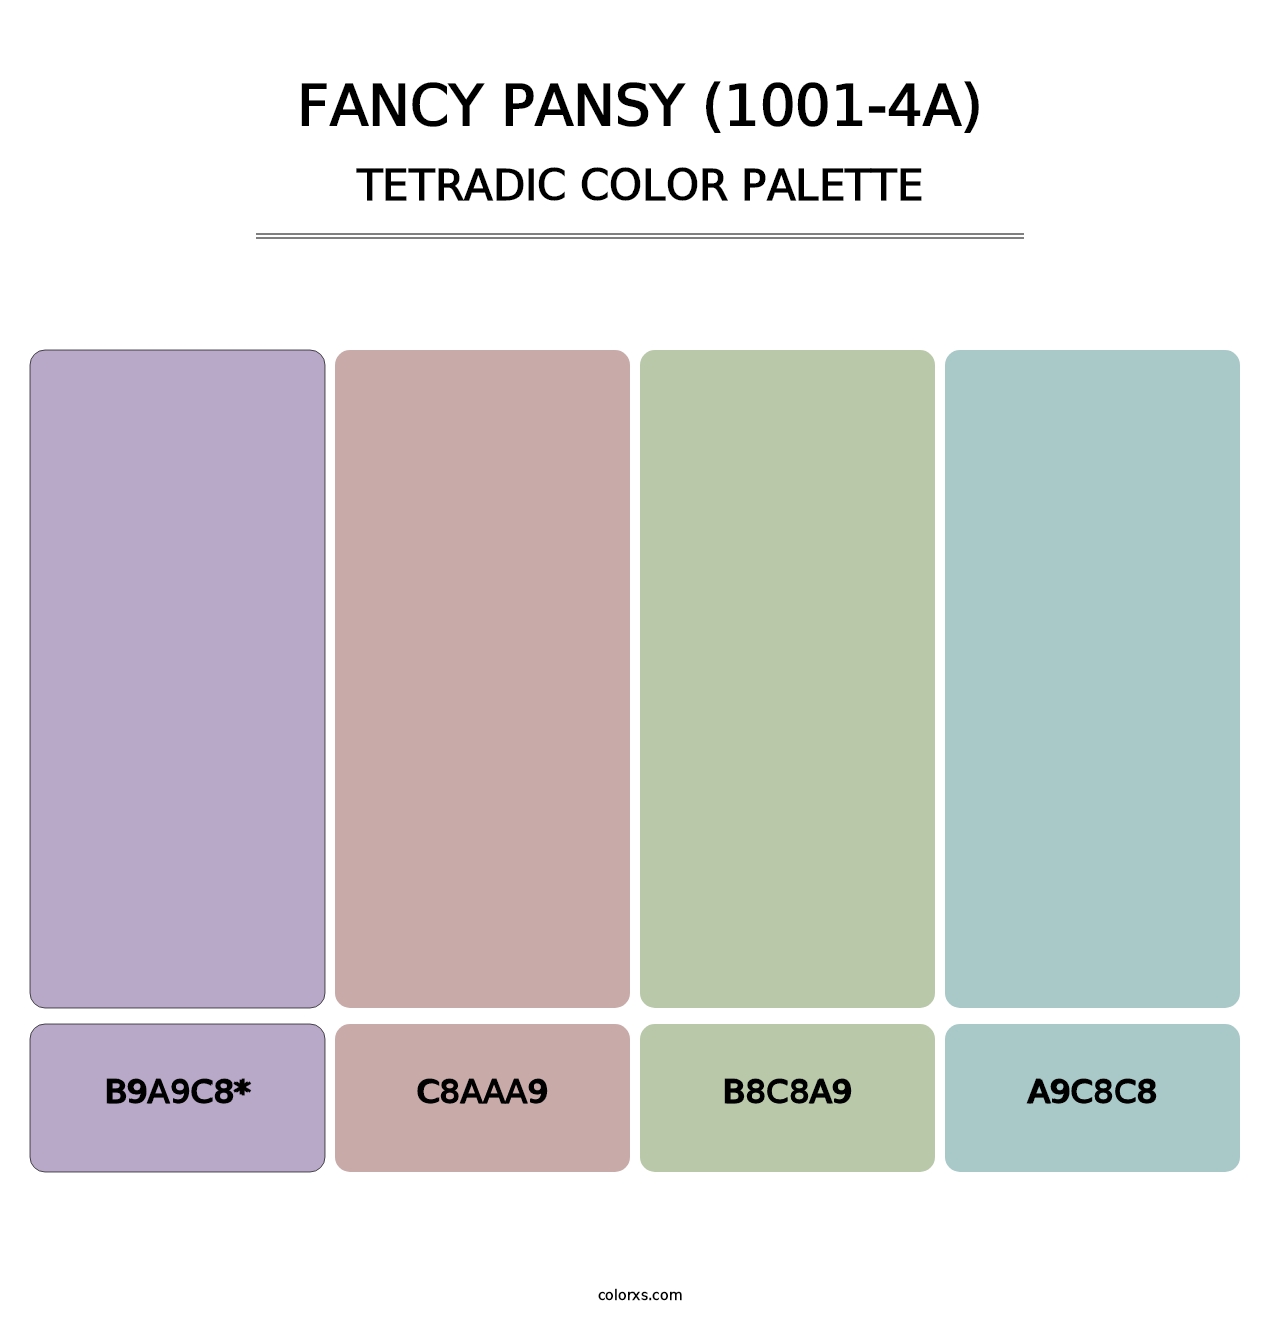 Fancy Pansy (1001-4A) - Tetradic Color Palette